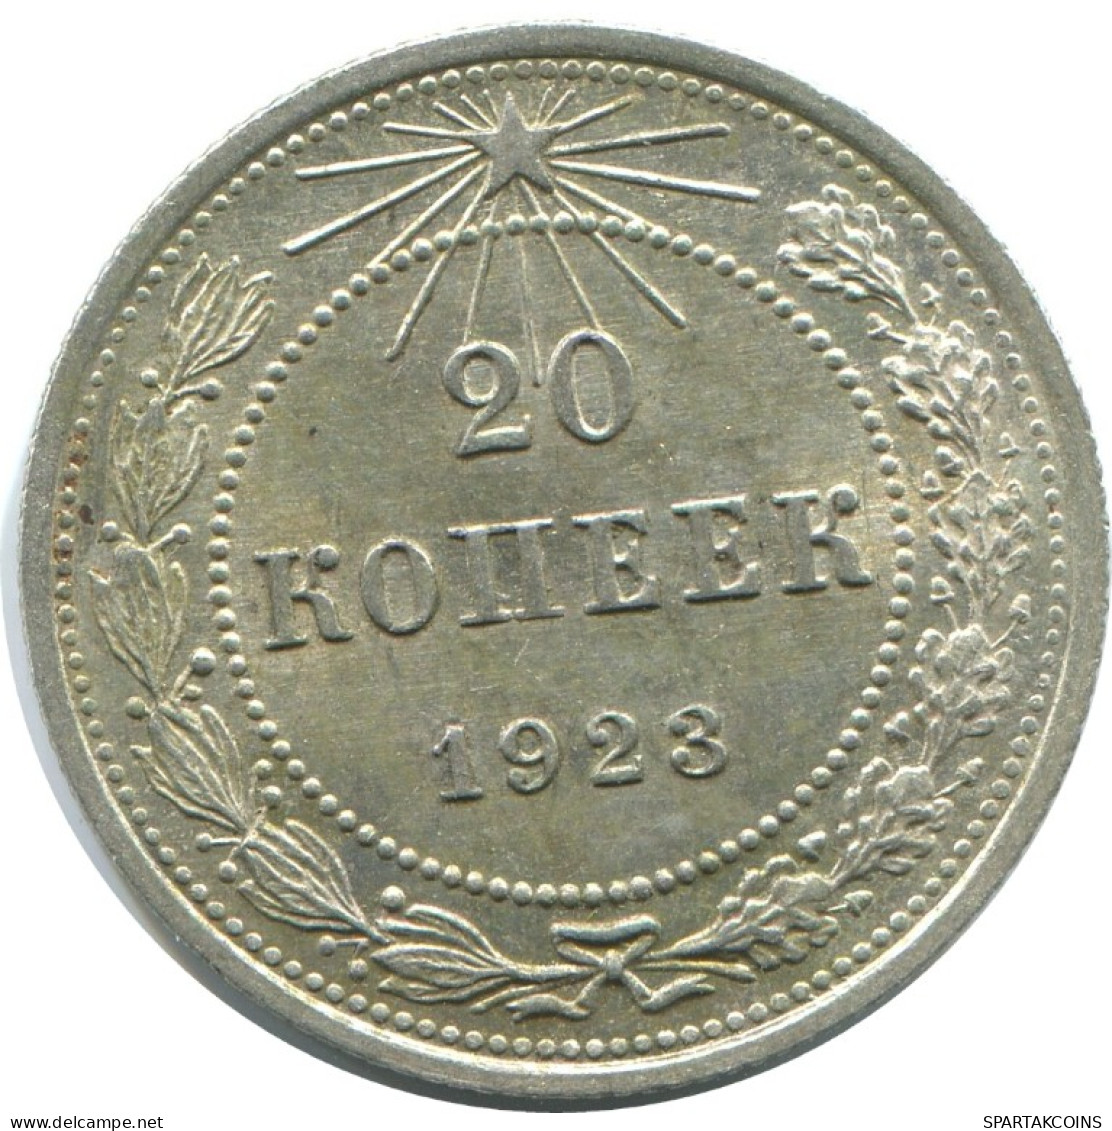 20 KOPEKS 1923 RUSSLAND RUSSIA RSFSR SILBER Münze HIGH GRADE #AF447.4.D.A - Russland